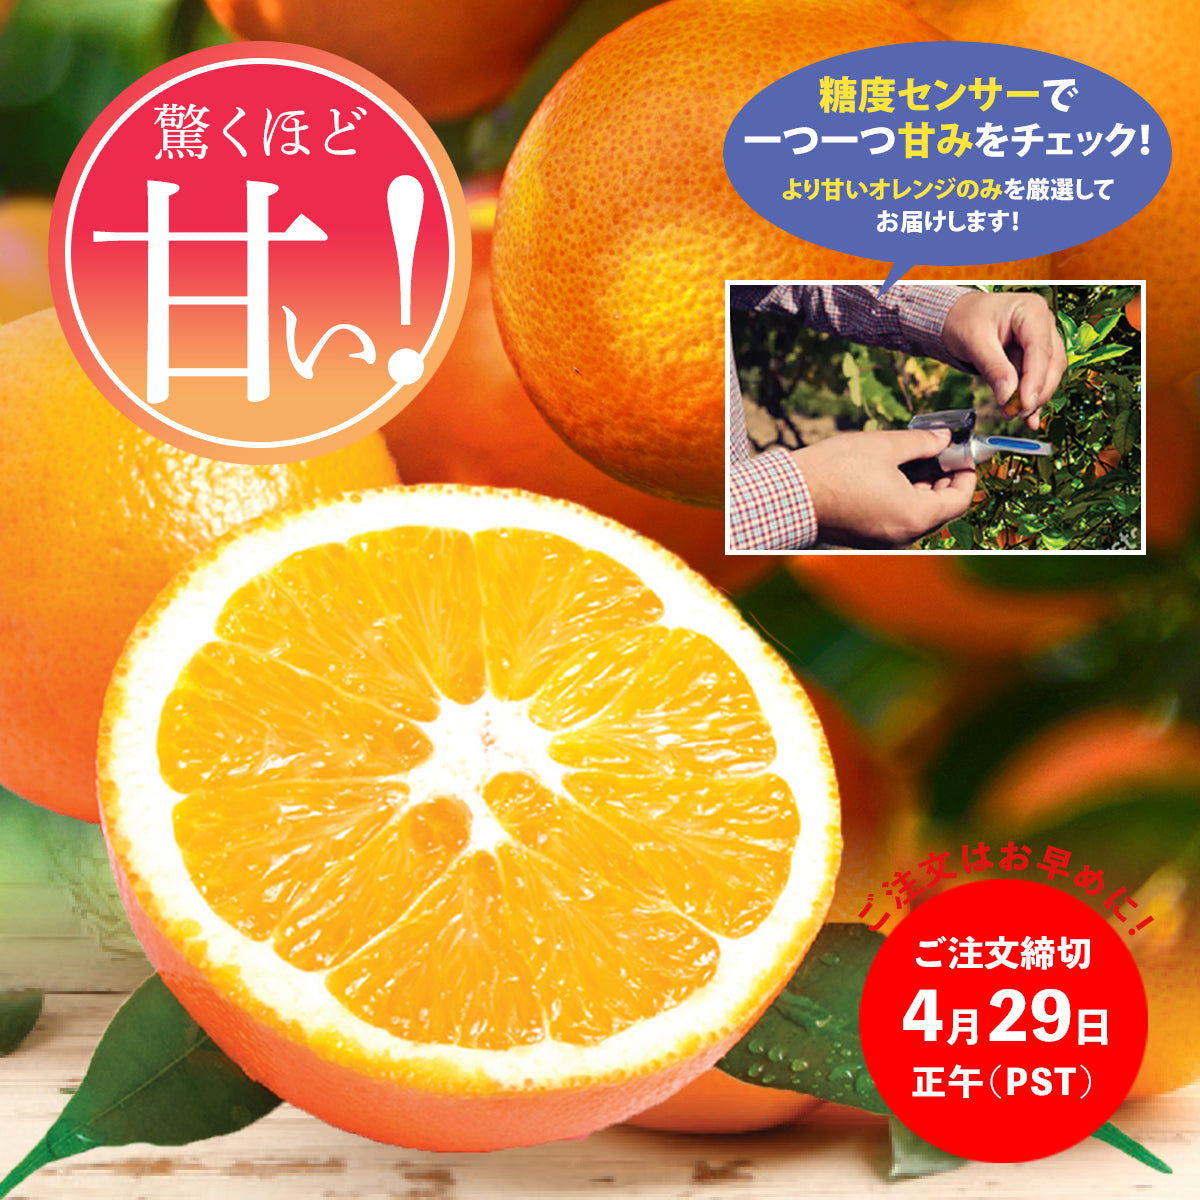 Extra Sweet Royal Navel Oranges (L)